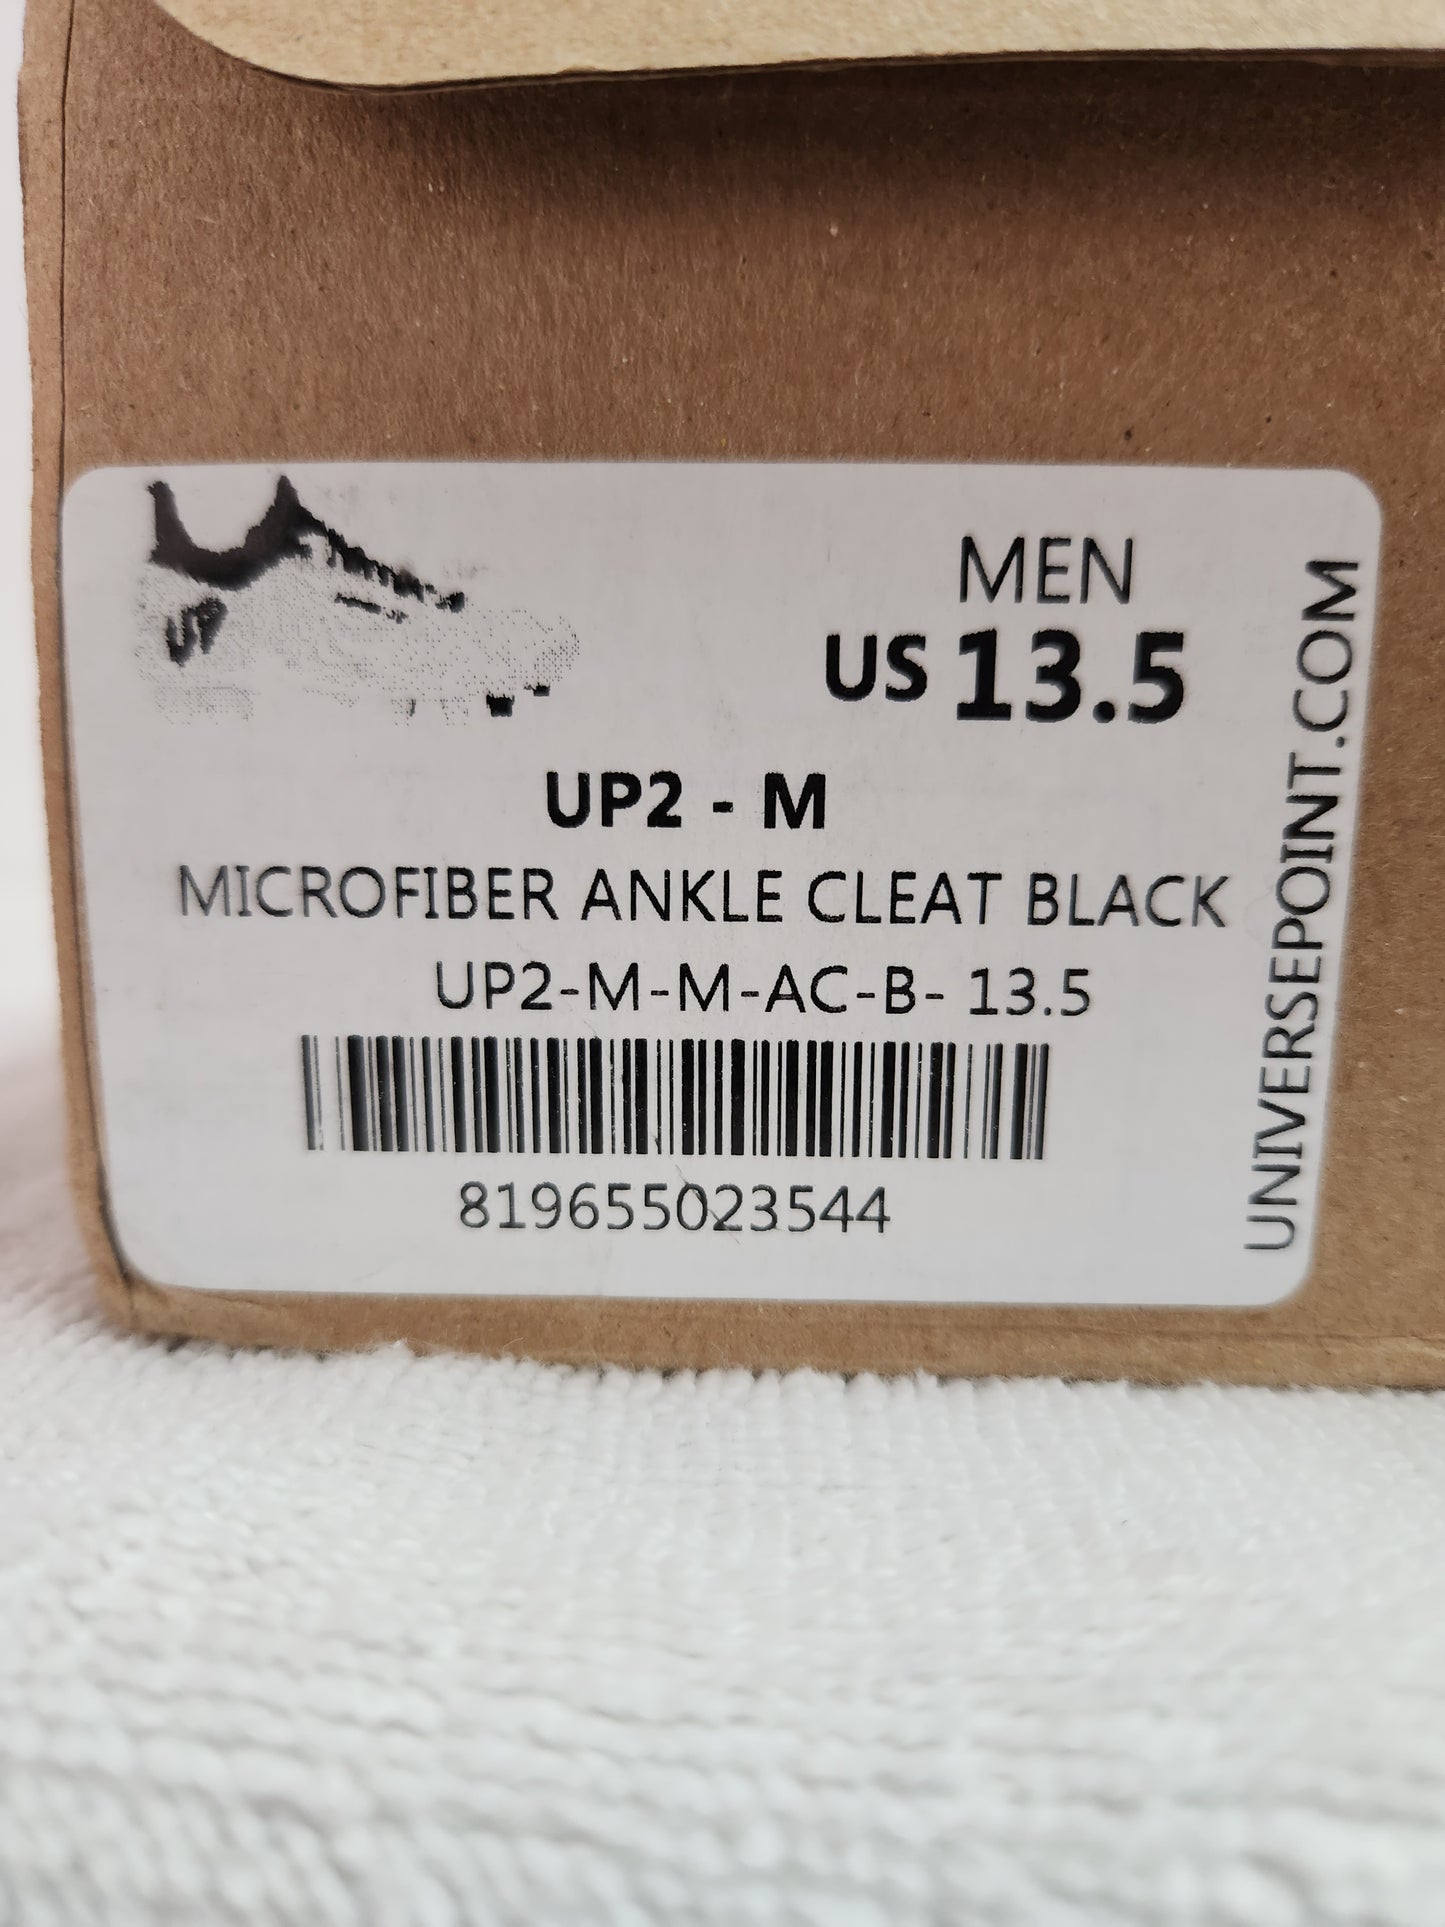 NIB - Rare Universe Point Men's Black Microfiber Ankle Cleats - Size: 13.5